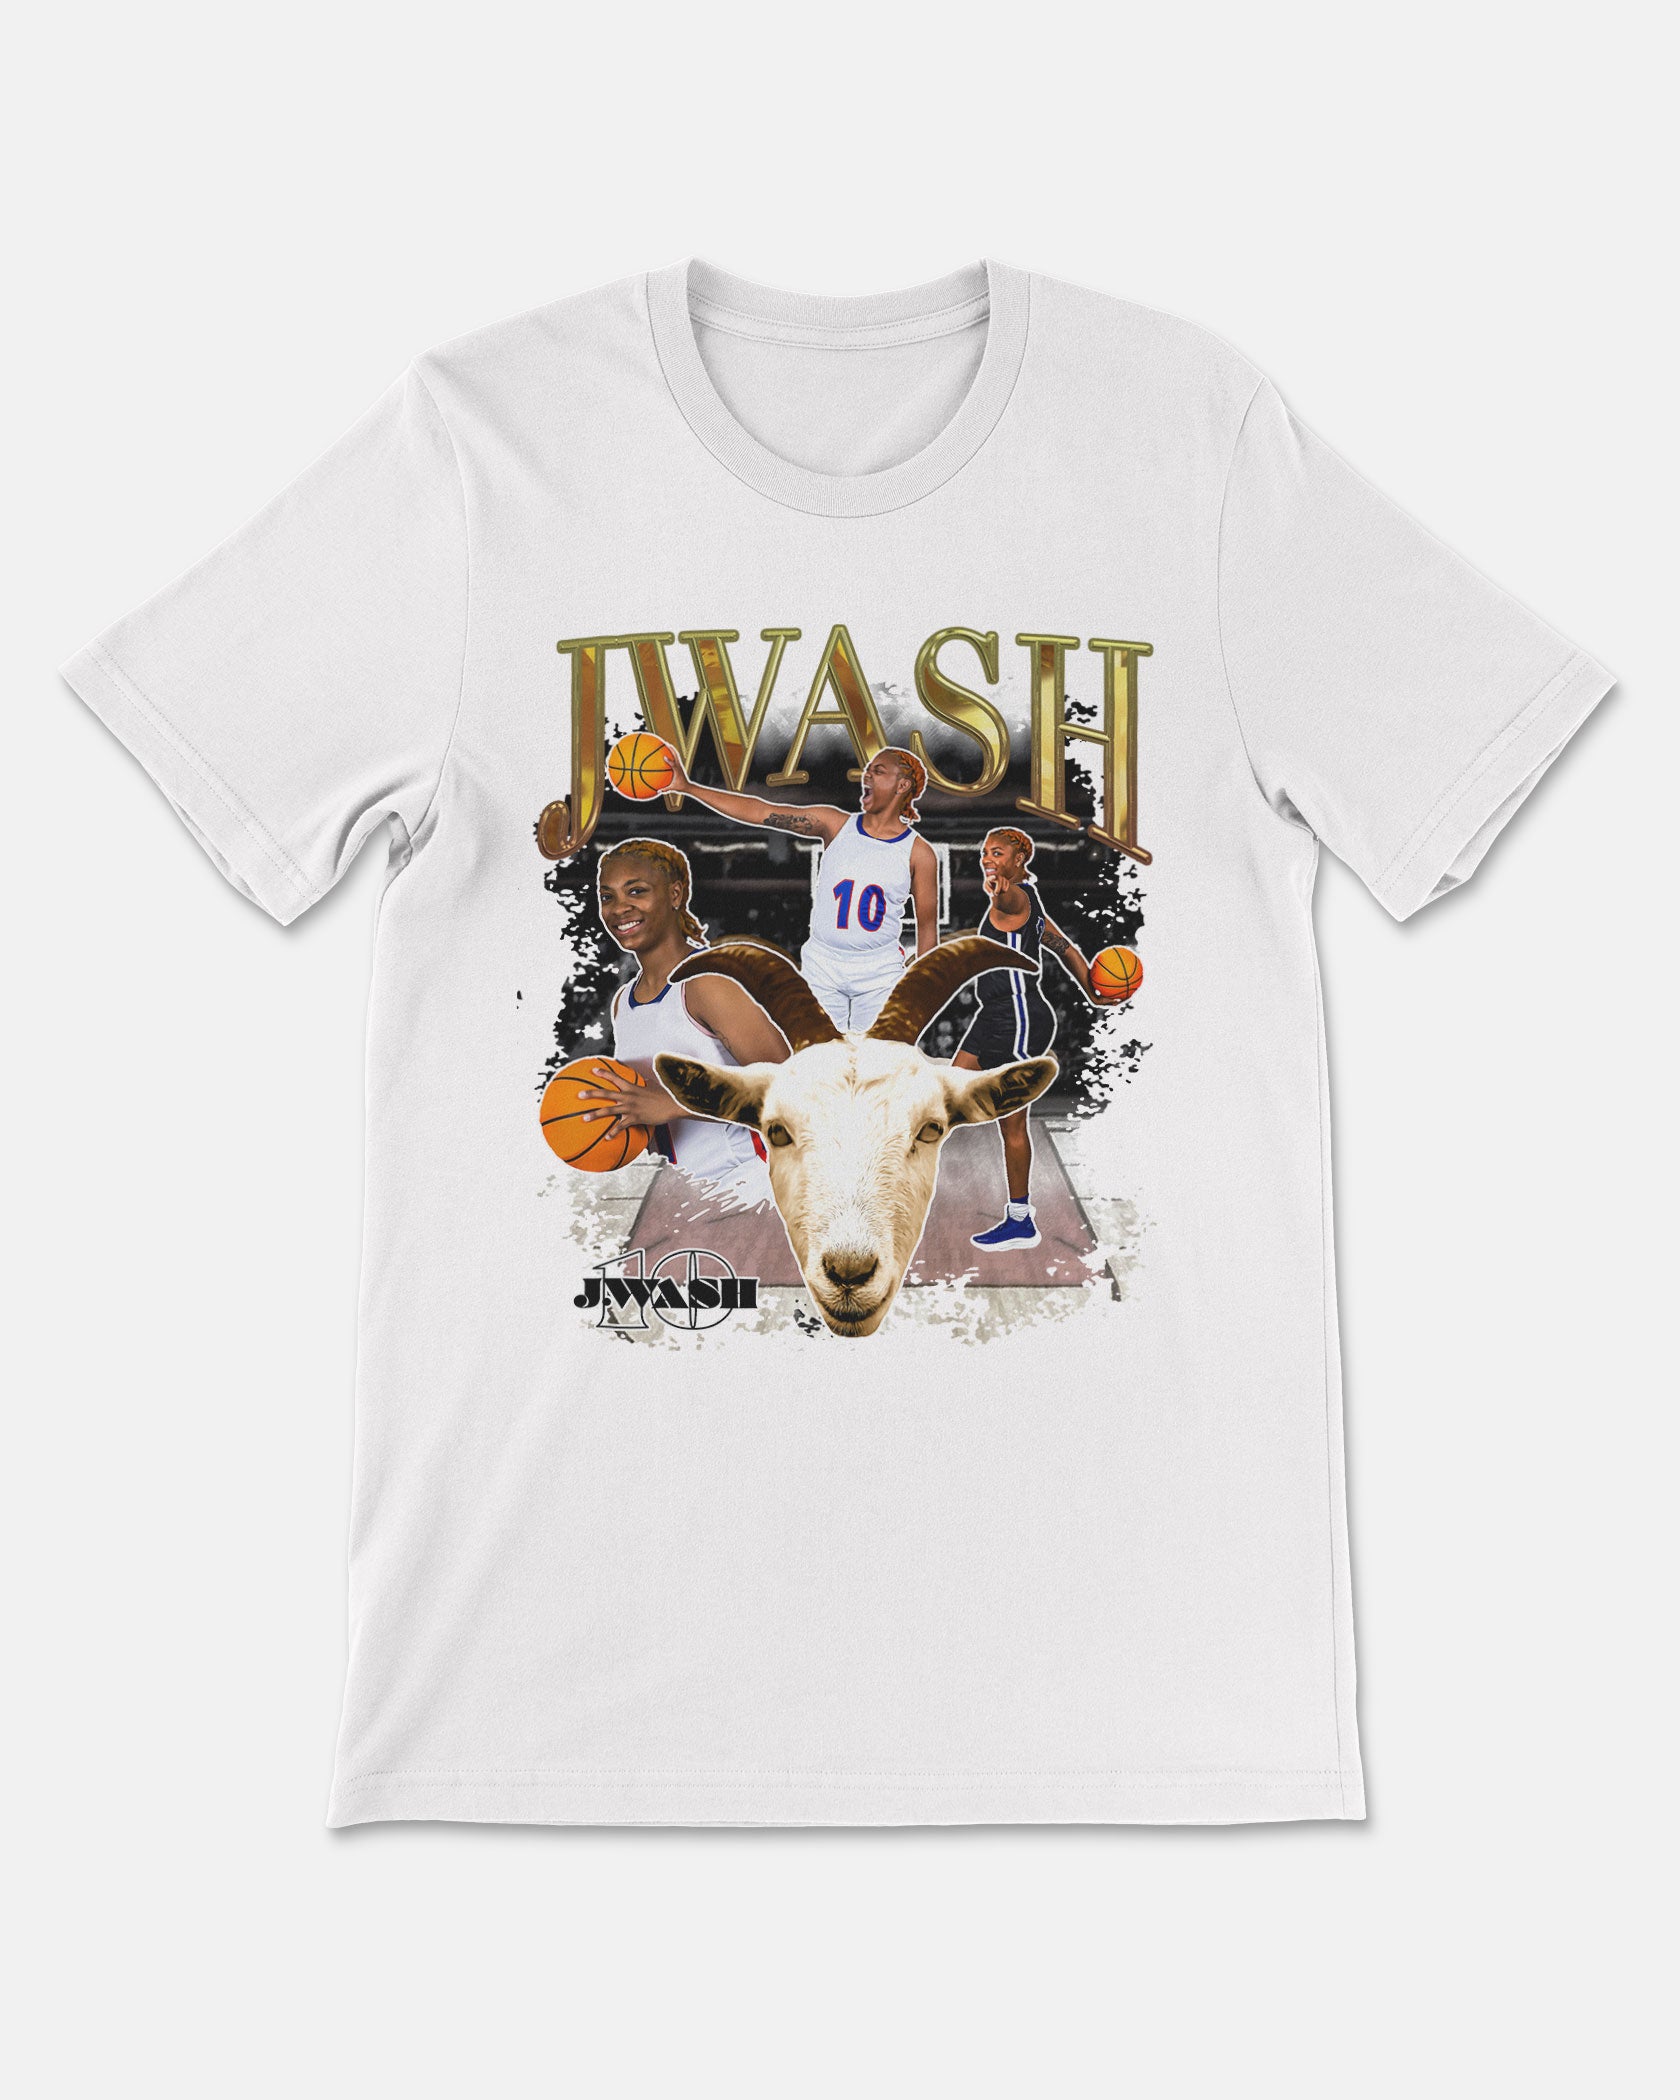 Jireh Washington Shirt 002